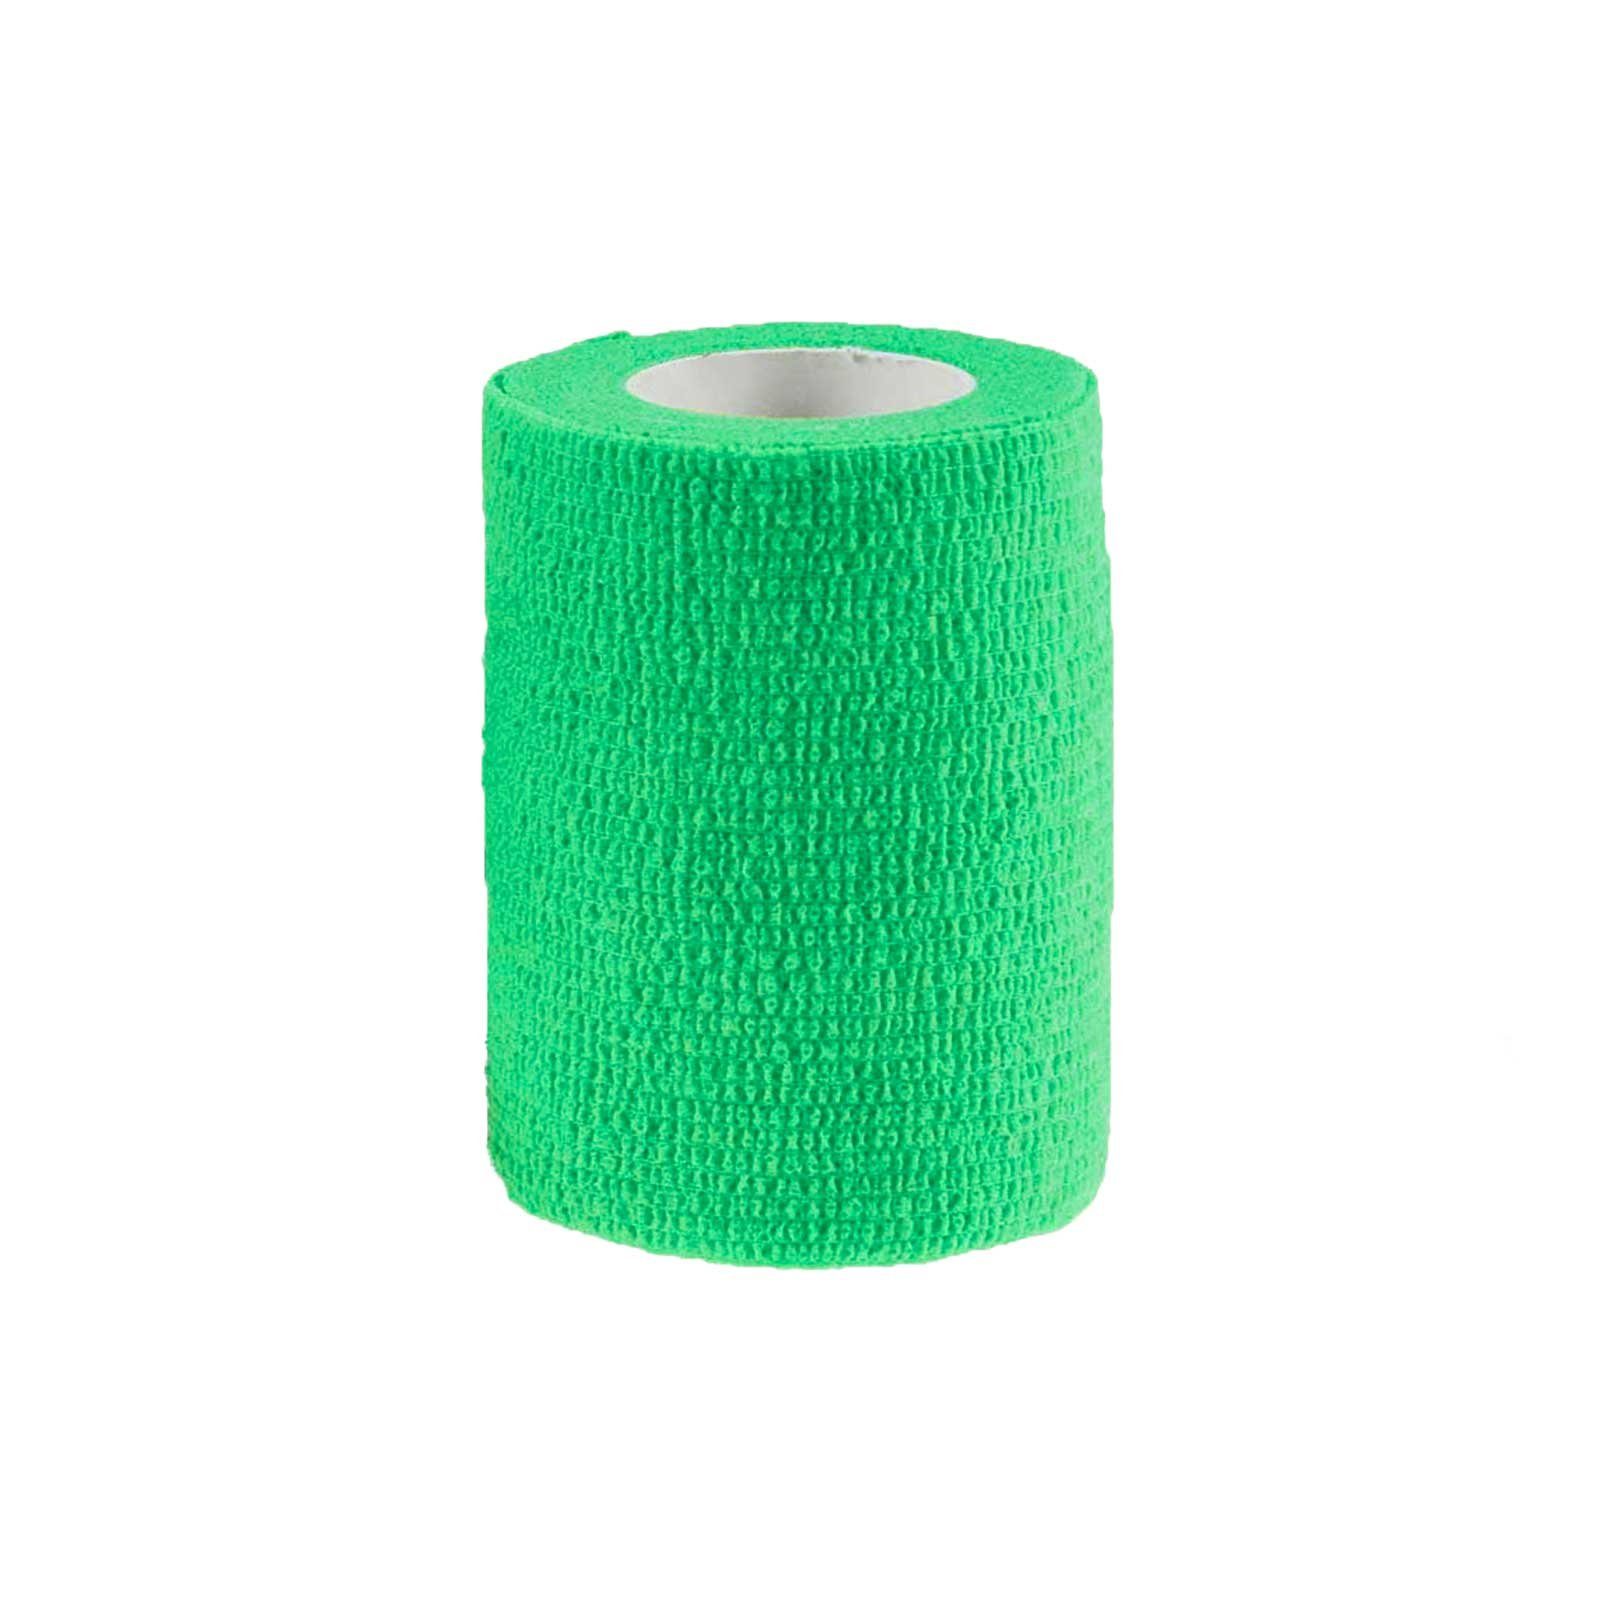 Haftbandage green 7,5cm light meDDio 1 Pferdebandage Selbsthaftende Bandage / Fixierbinde